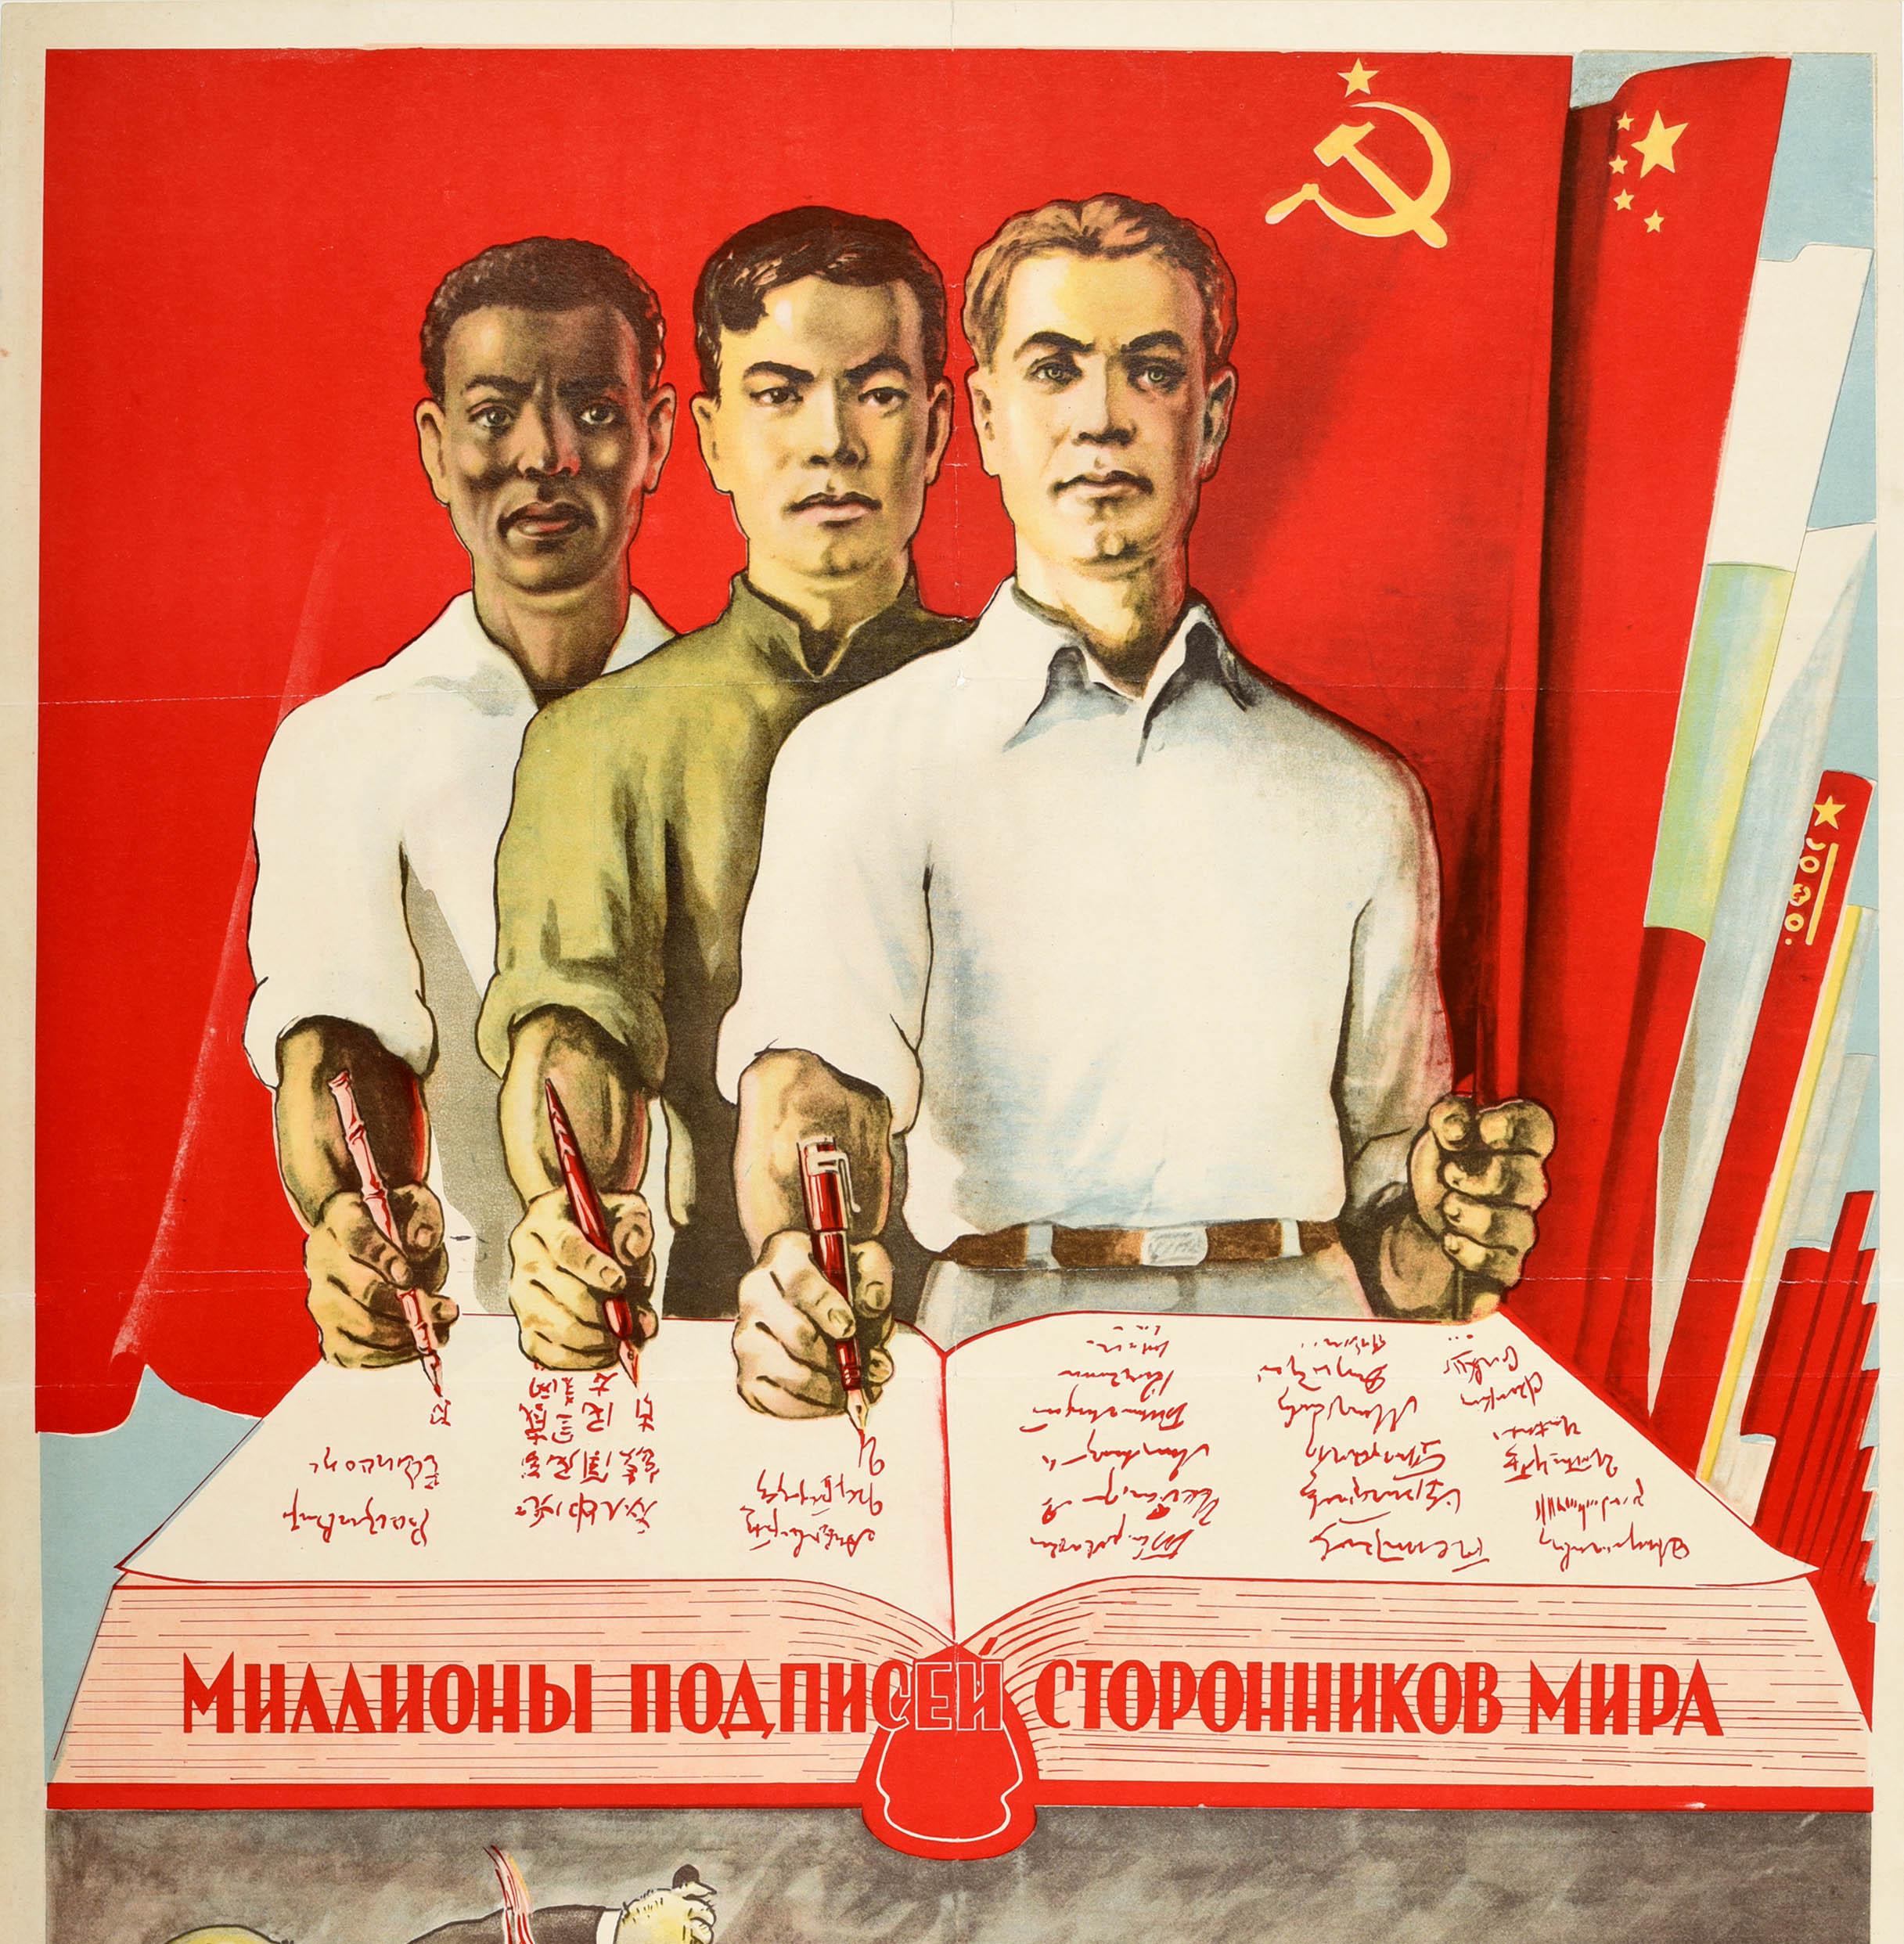 cold war propaganda posters ussr